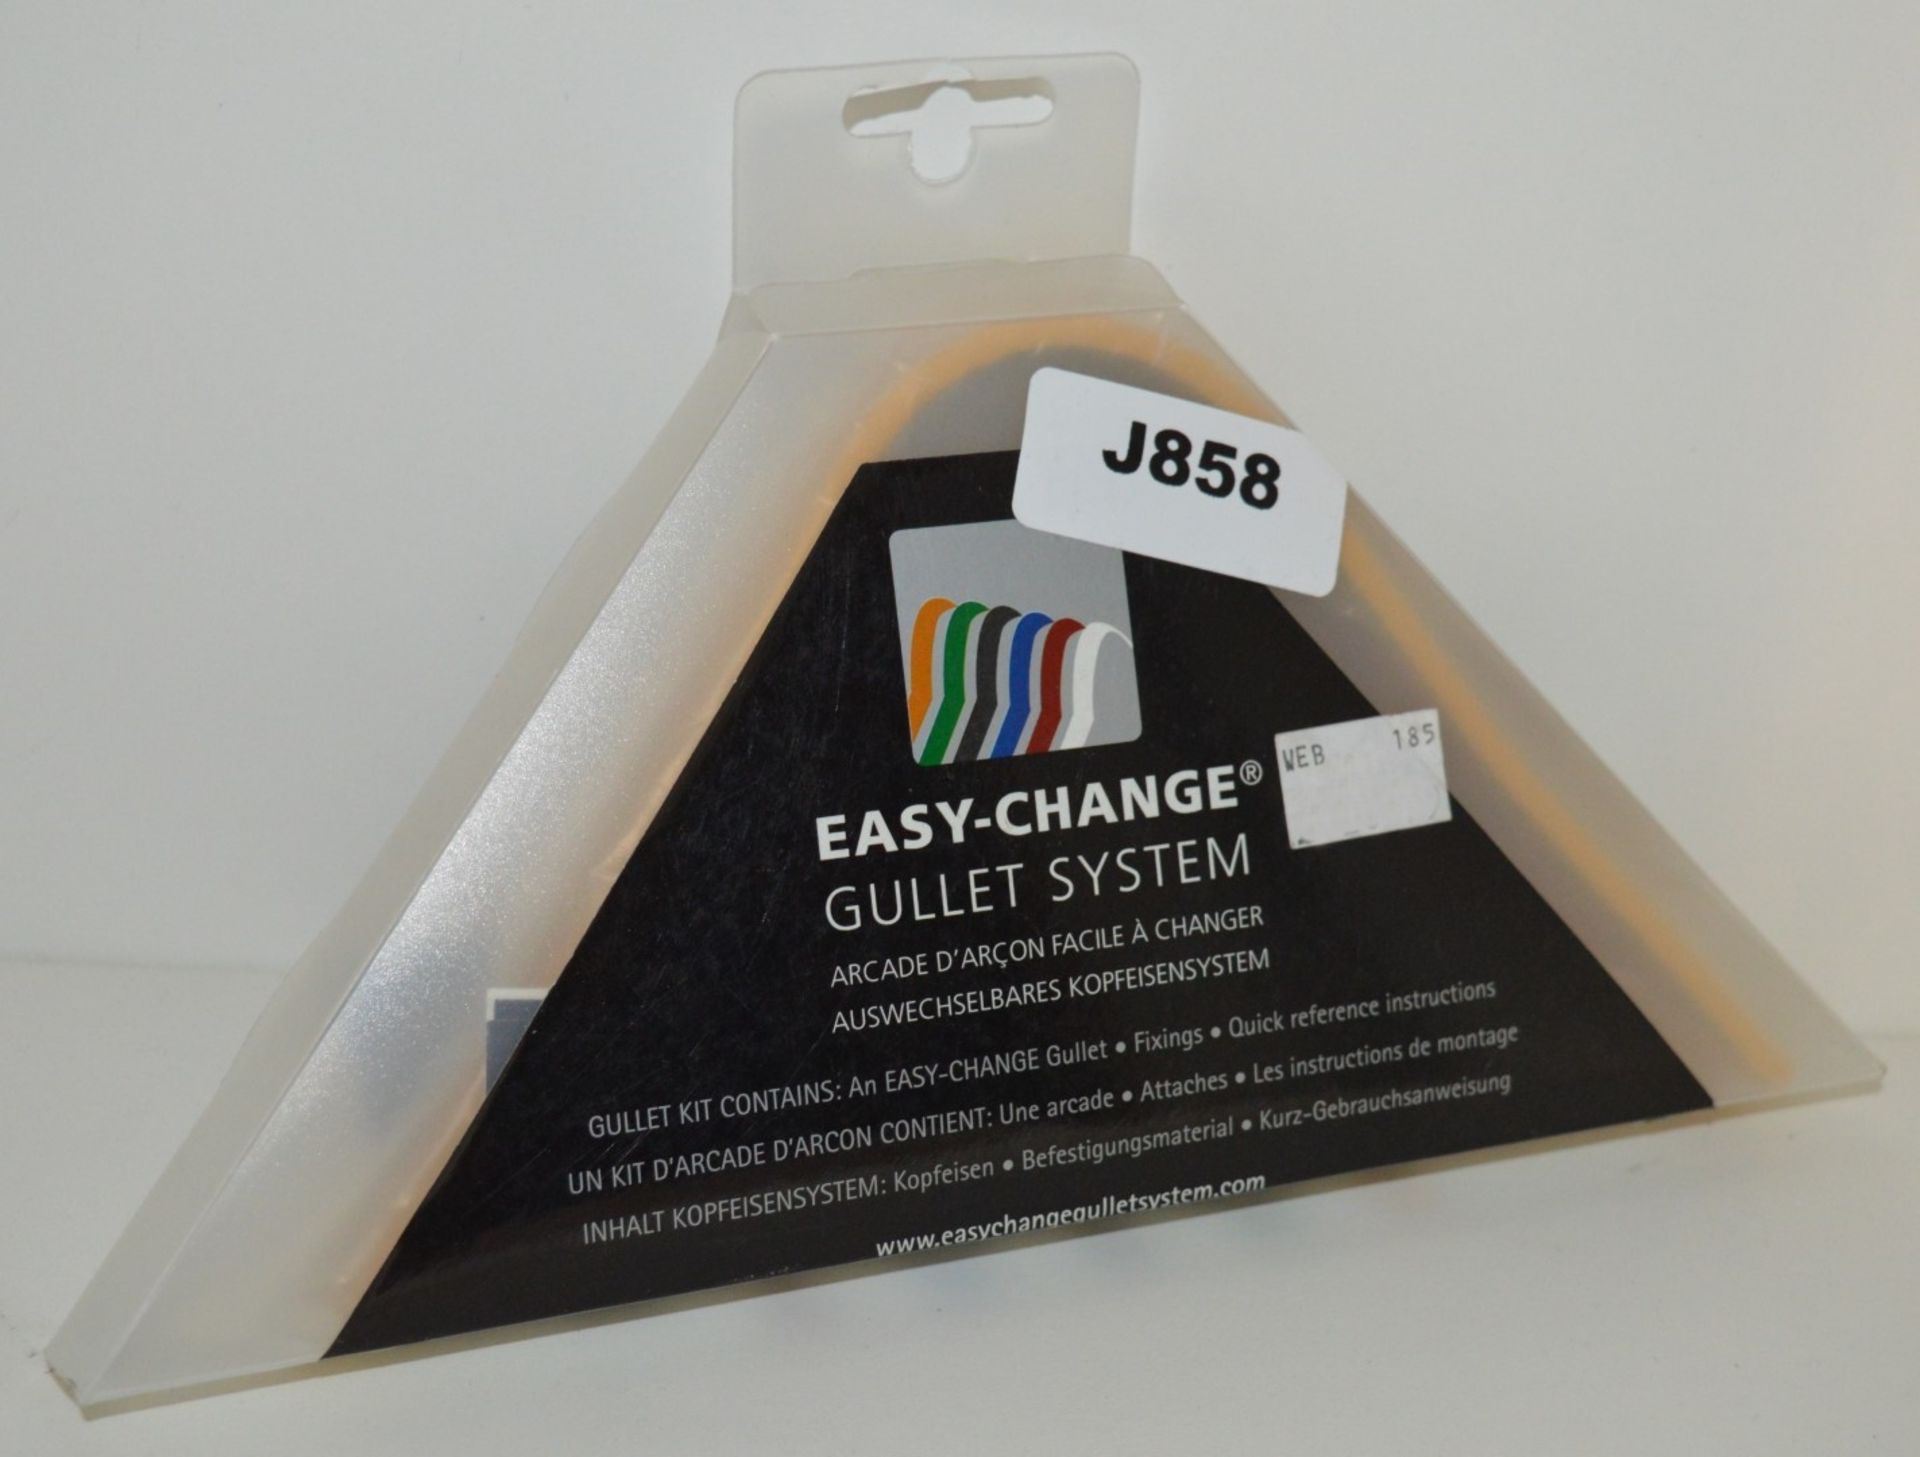 1 x Easy Change Gullet System Narrow - New Stock - CL401 - Ref J858 - Location: Altrincham WA14